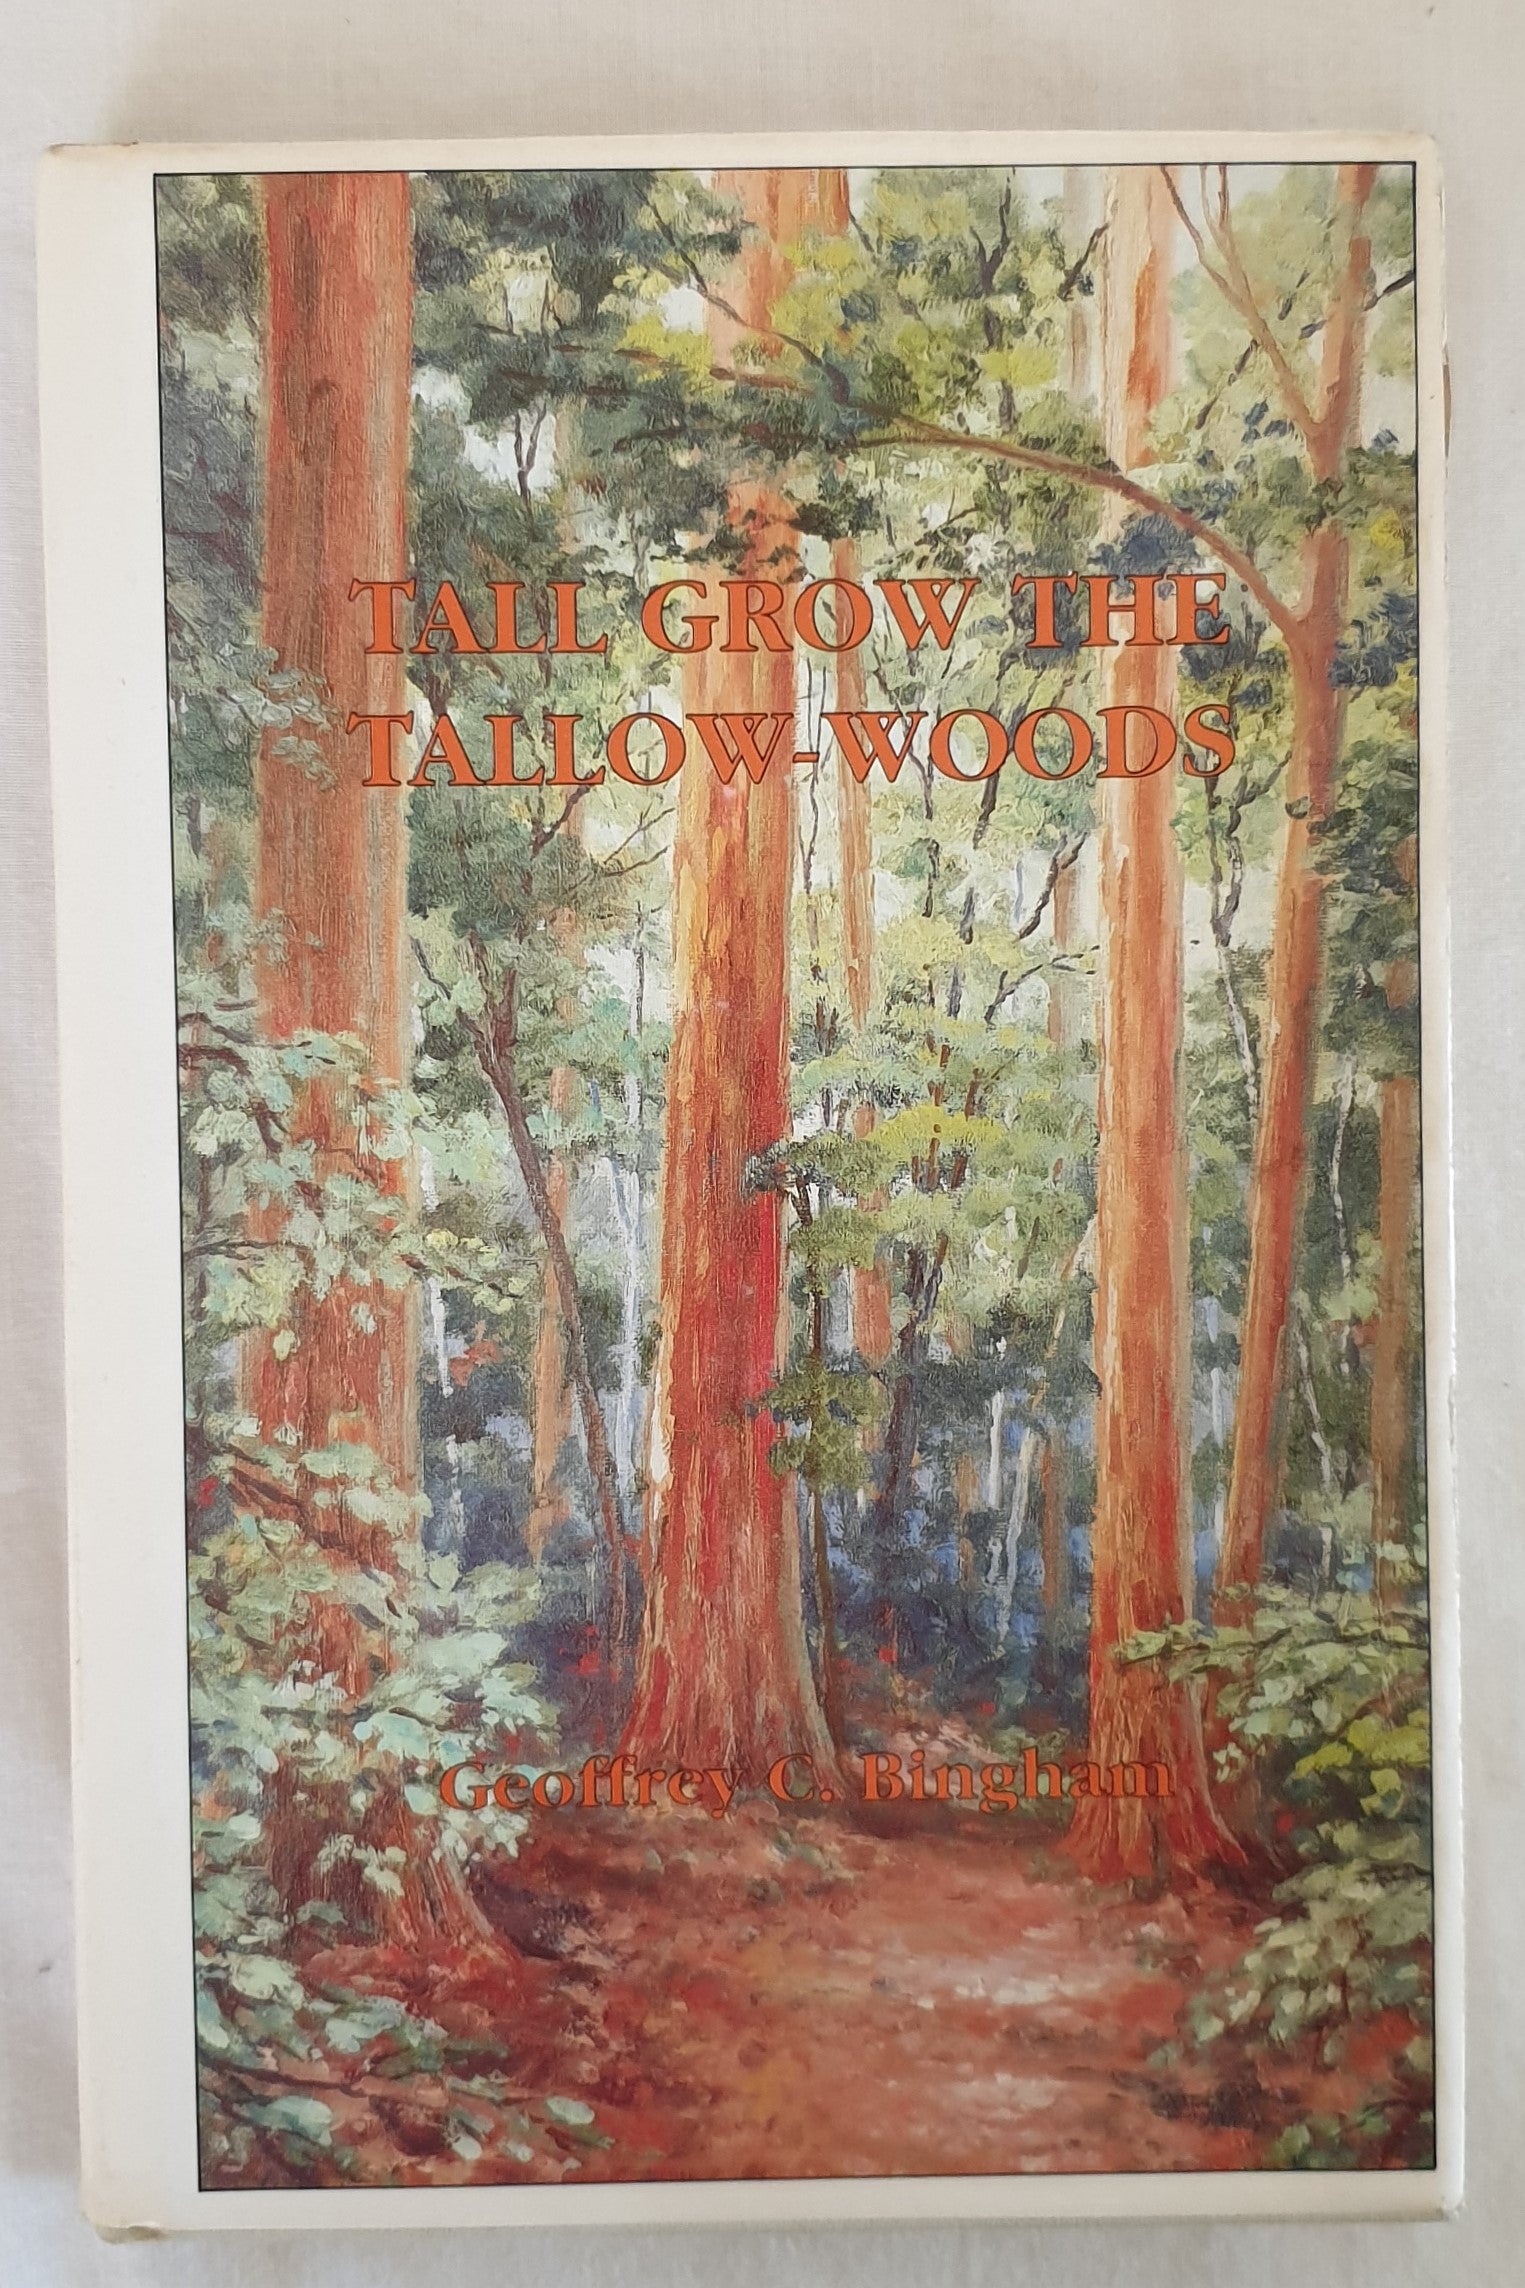 Tall Grow the Tallow-Woods by Geoffrey C. Bingham